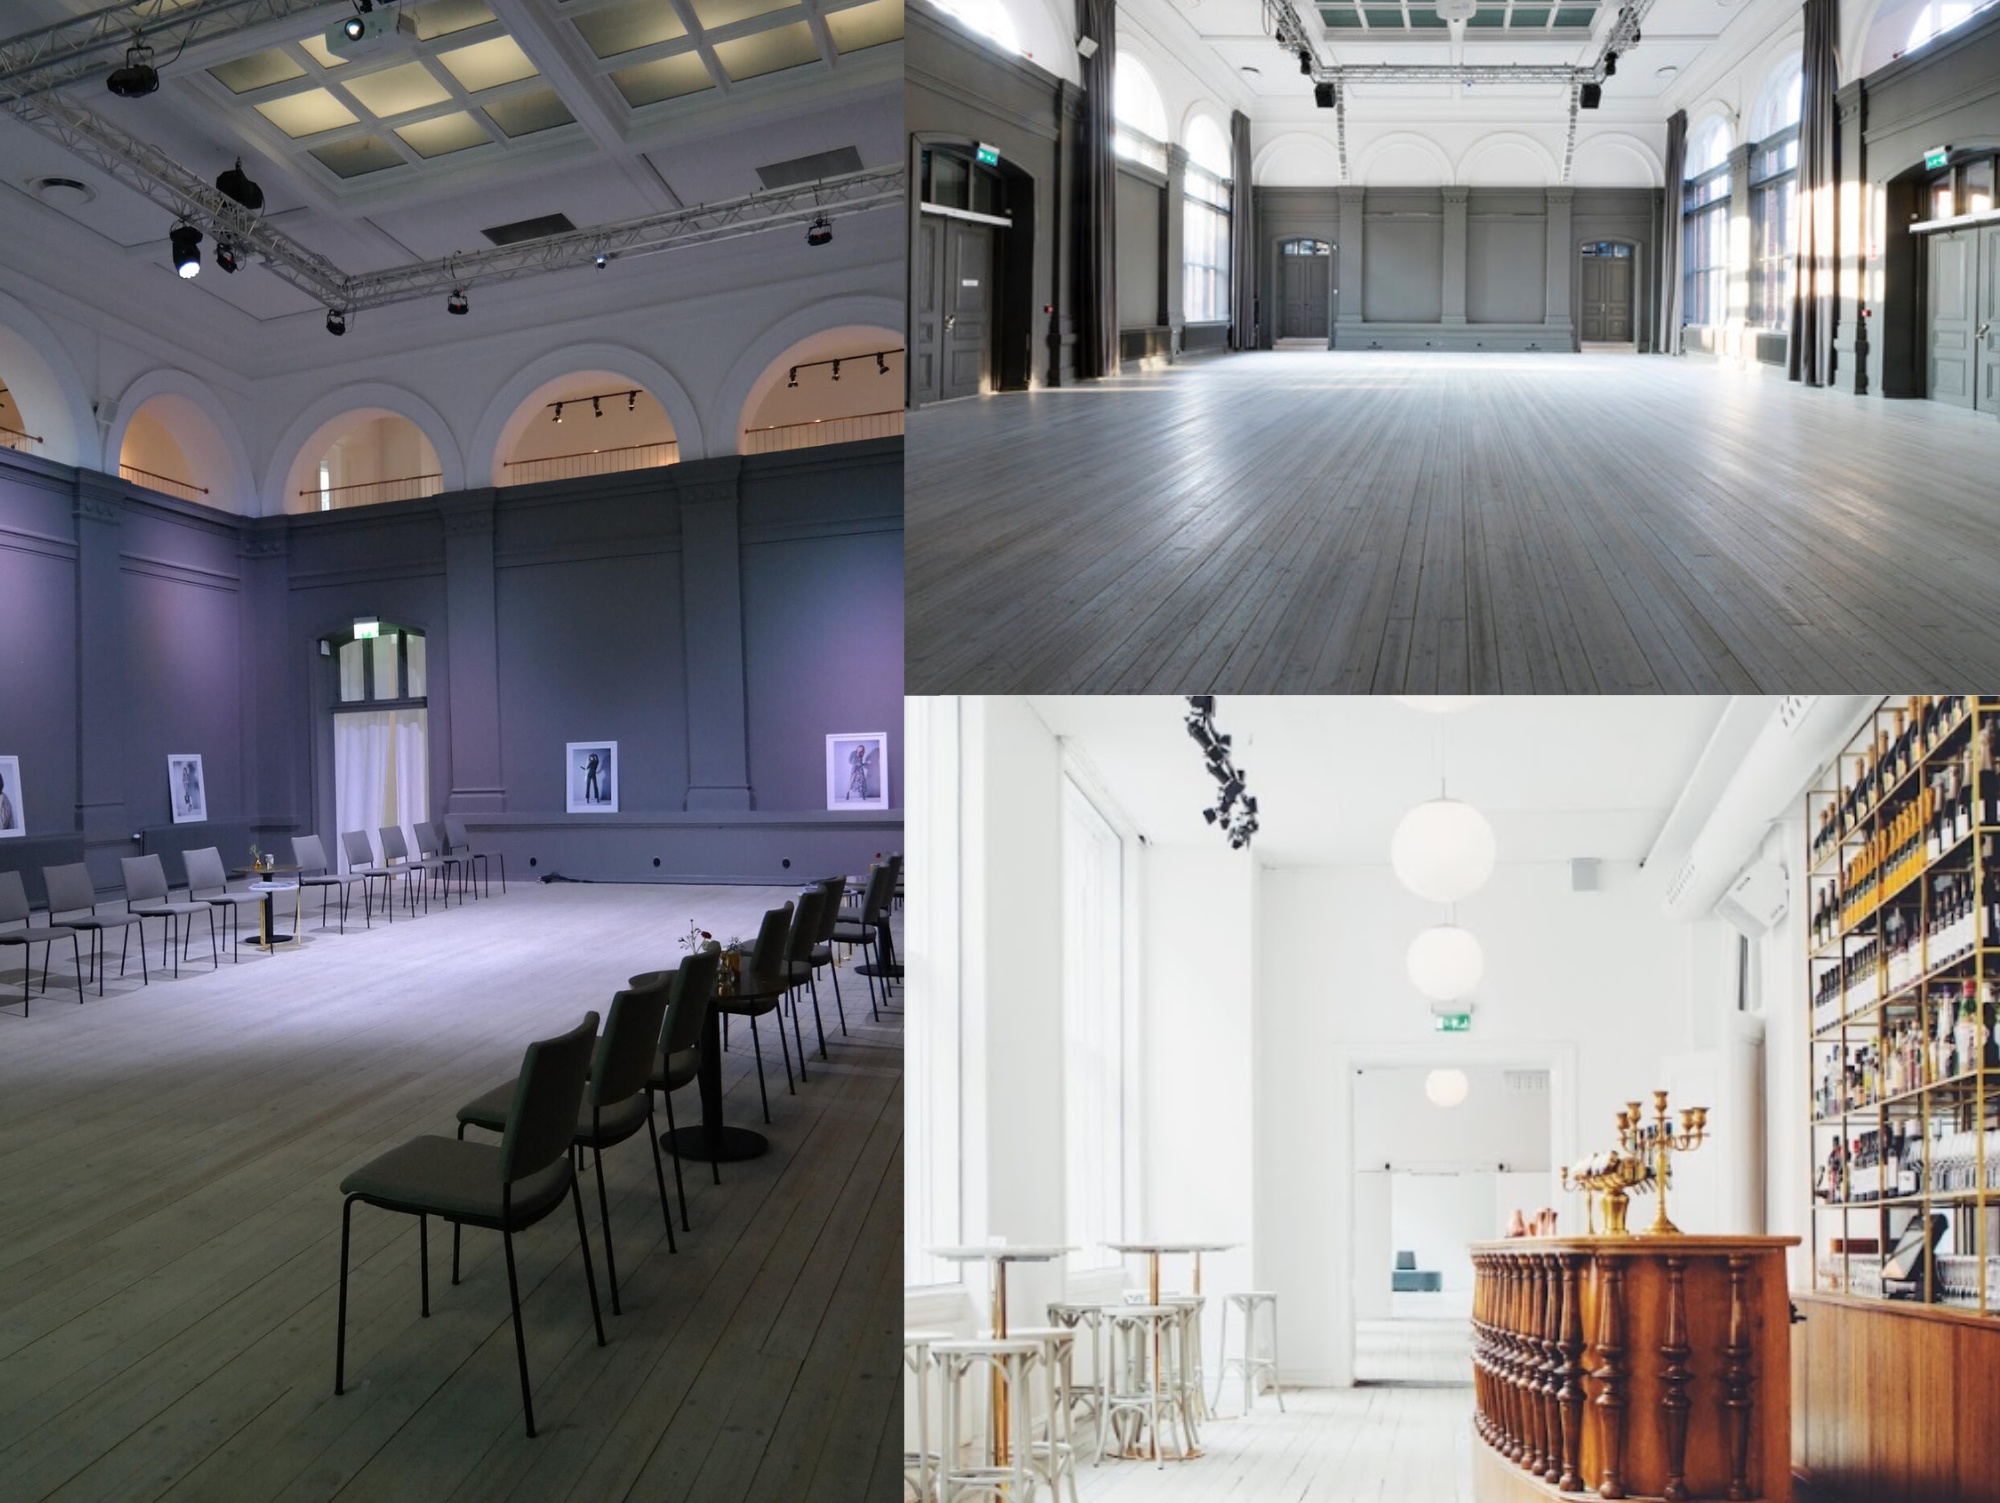 A collage capturing the different spaces inside Auktionsverket Kulturarena.